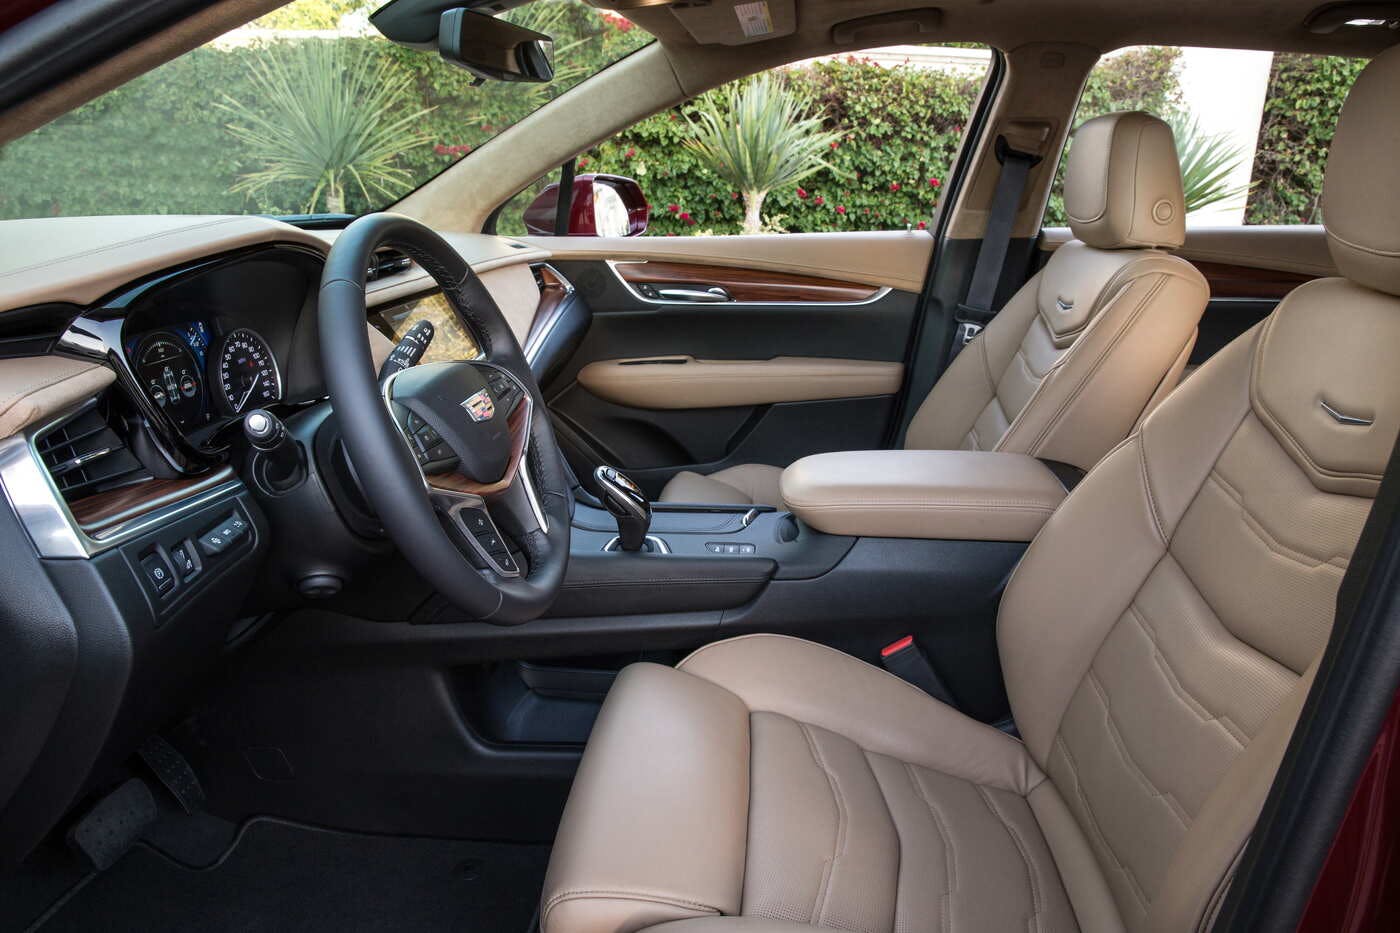 2019 Cadillac Xt5 Comparisons Reviews Pictures Truecar